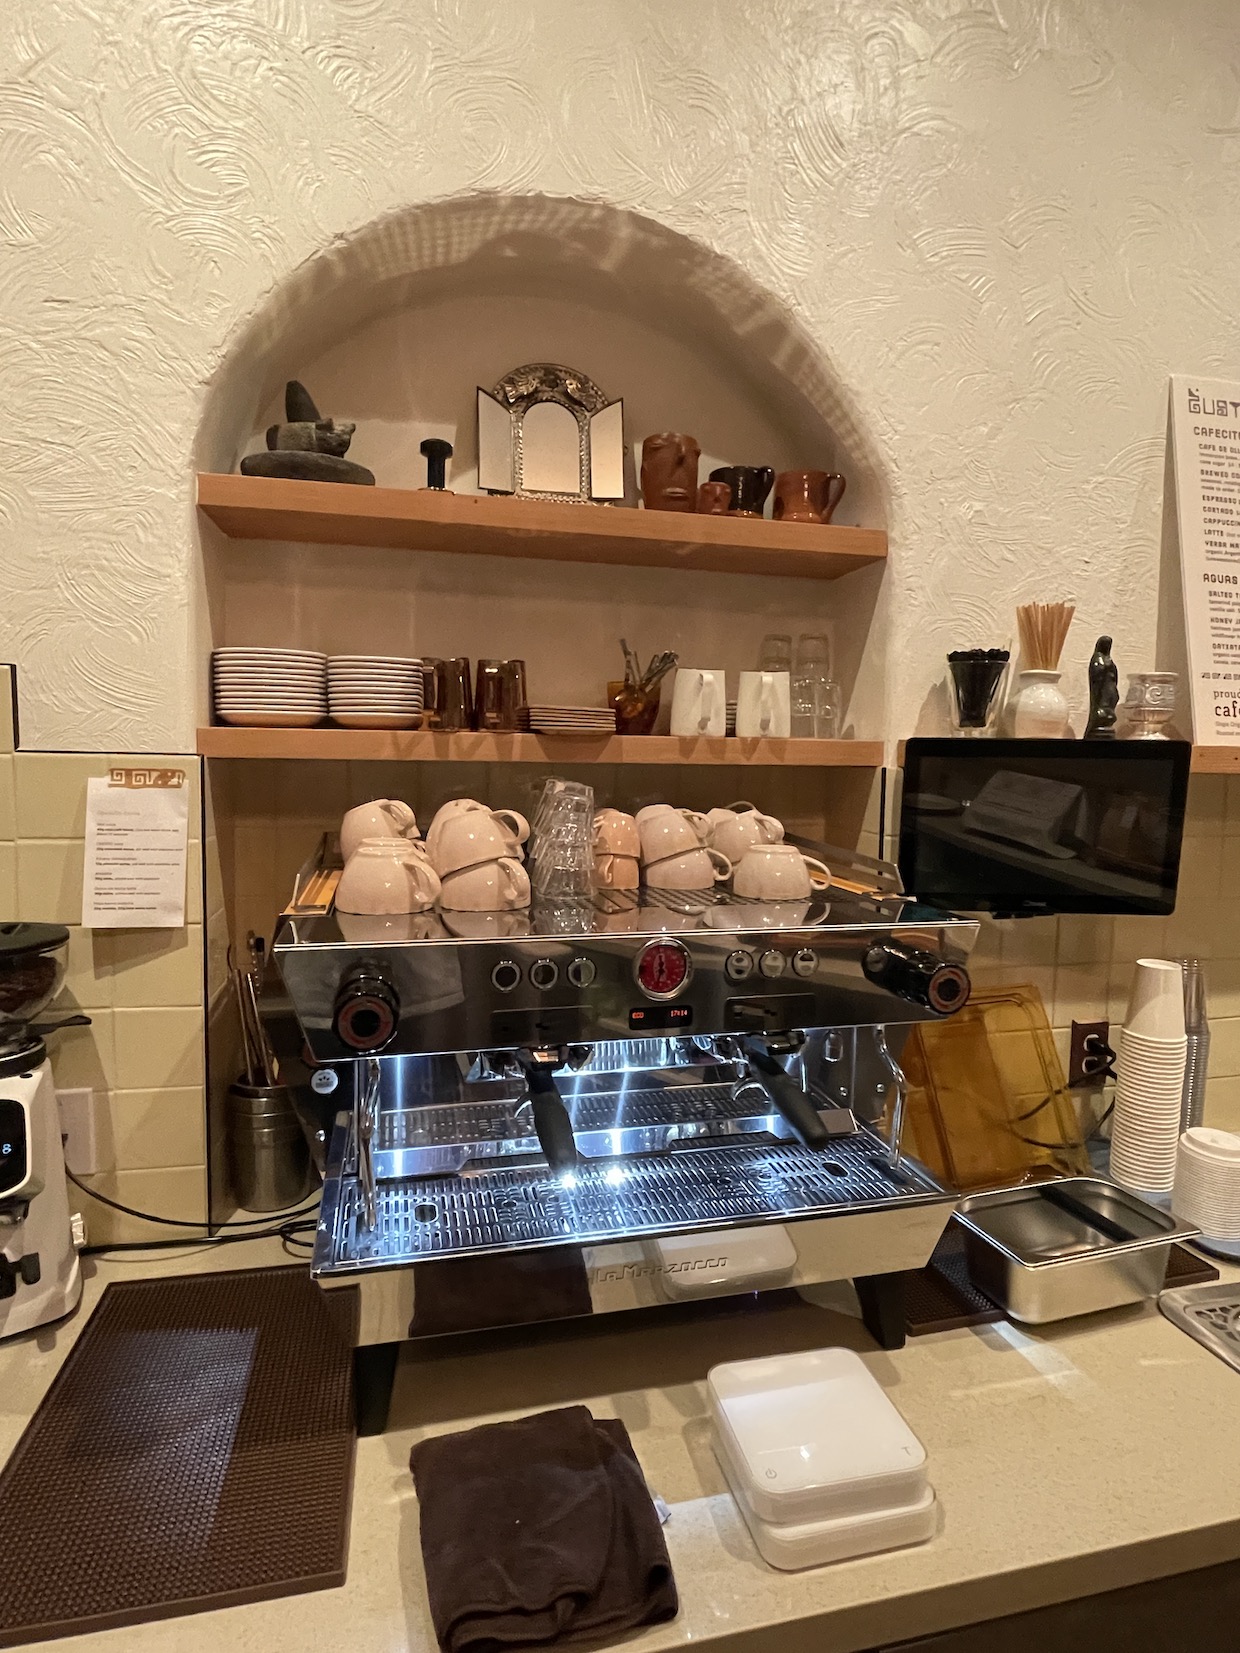 Cafe Cuate Gusto Bread Long Beach espresso